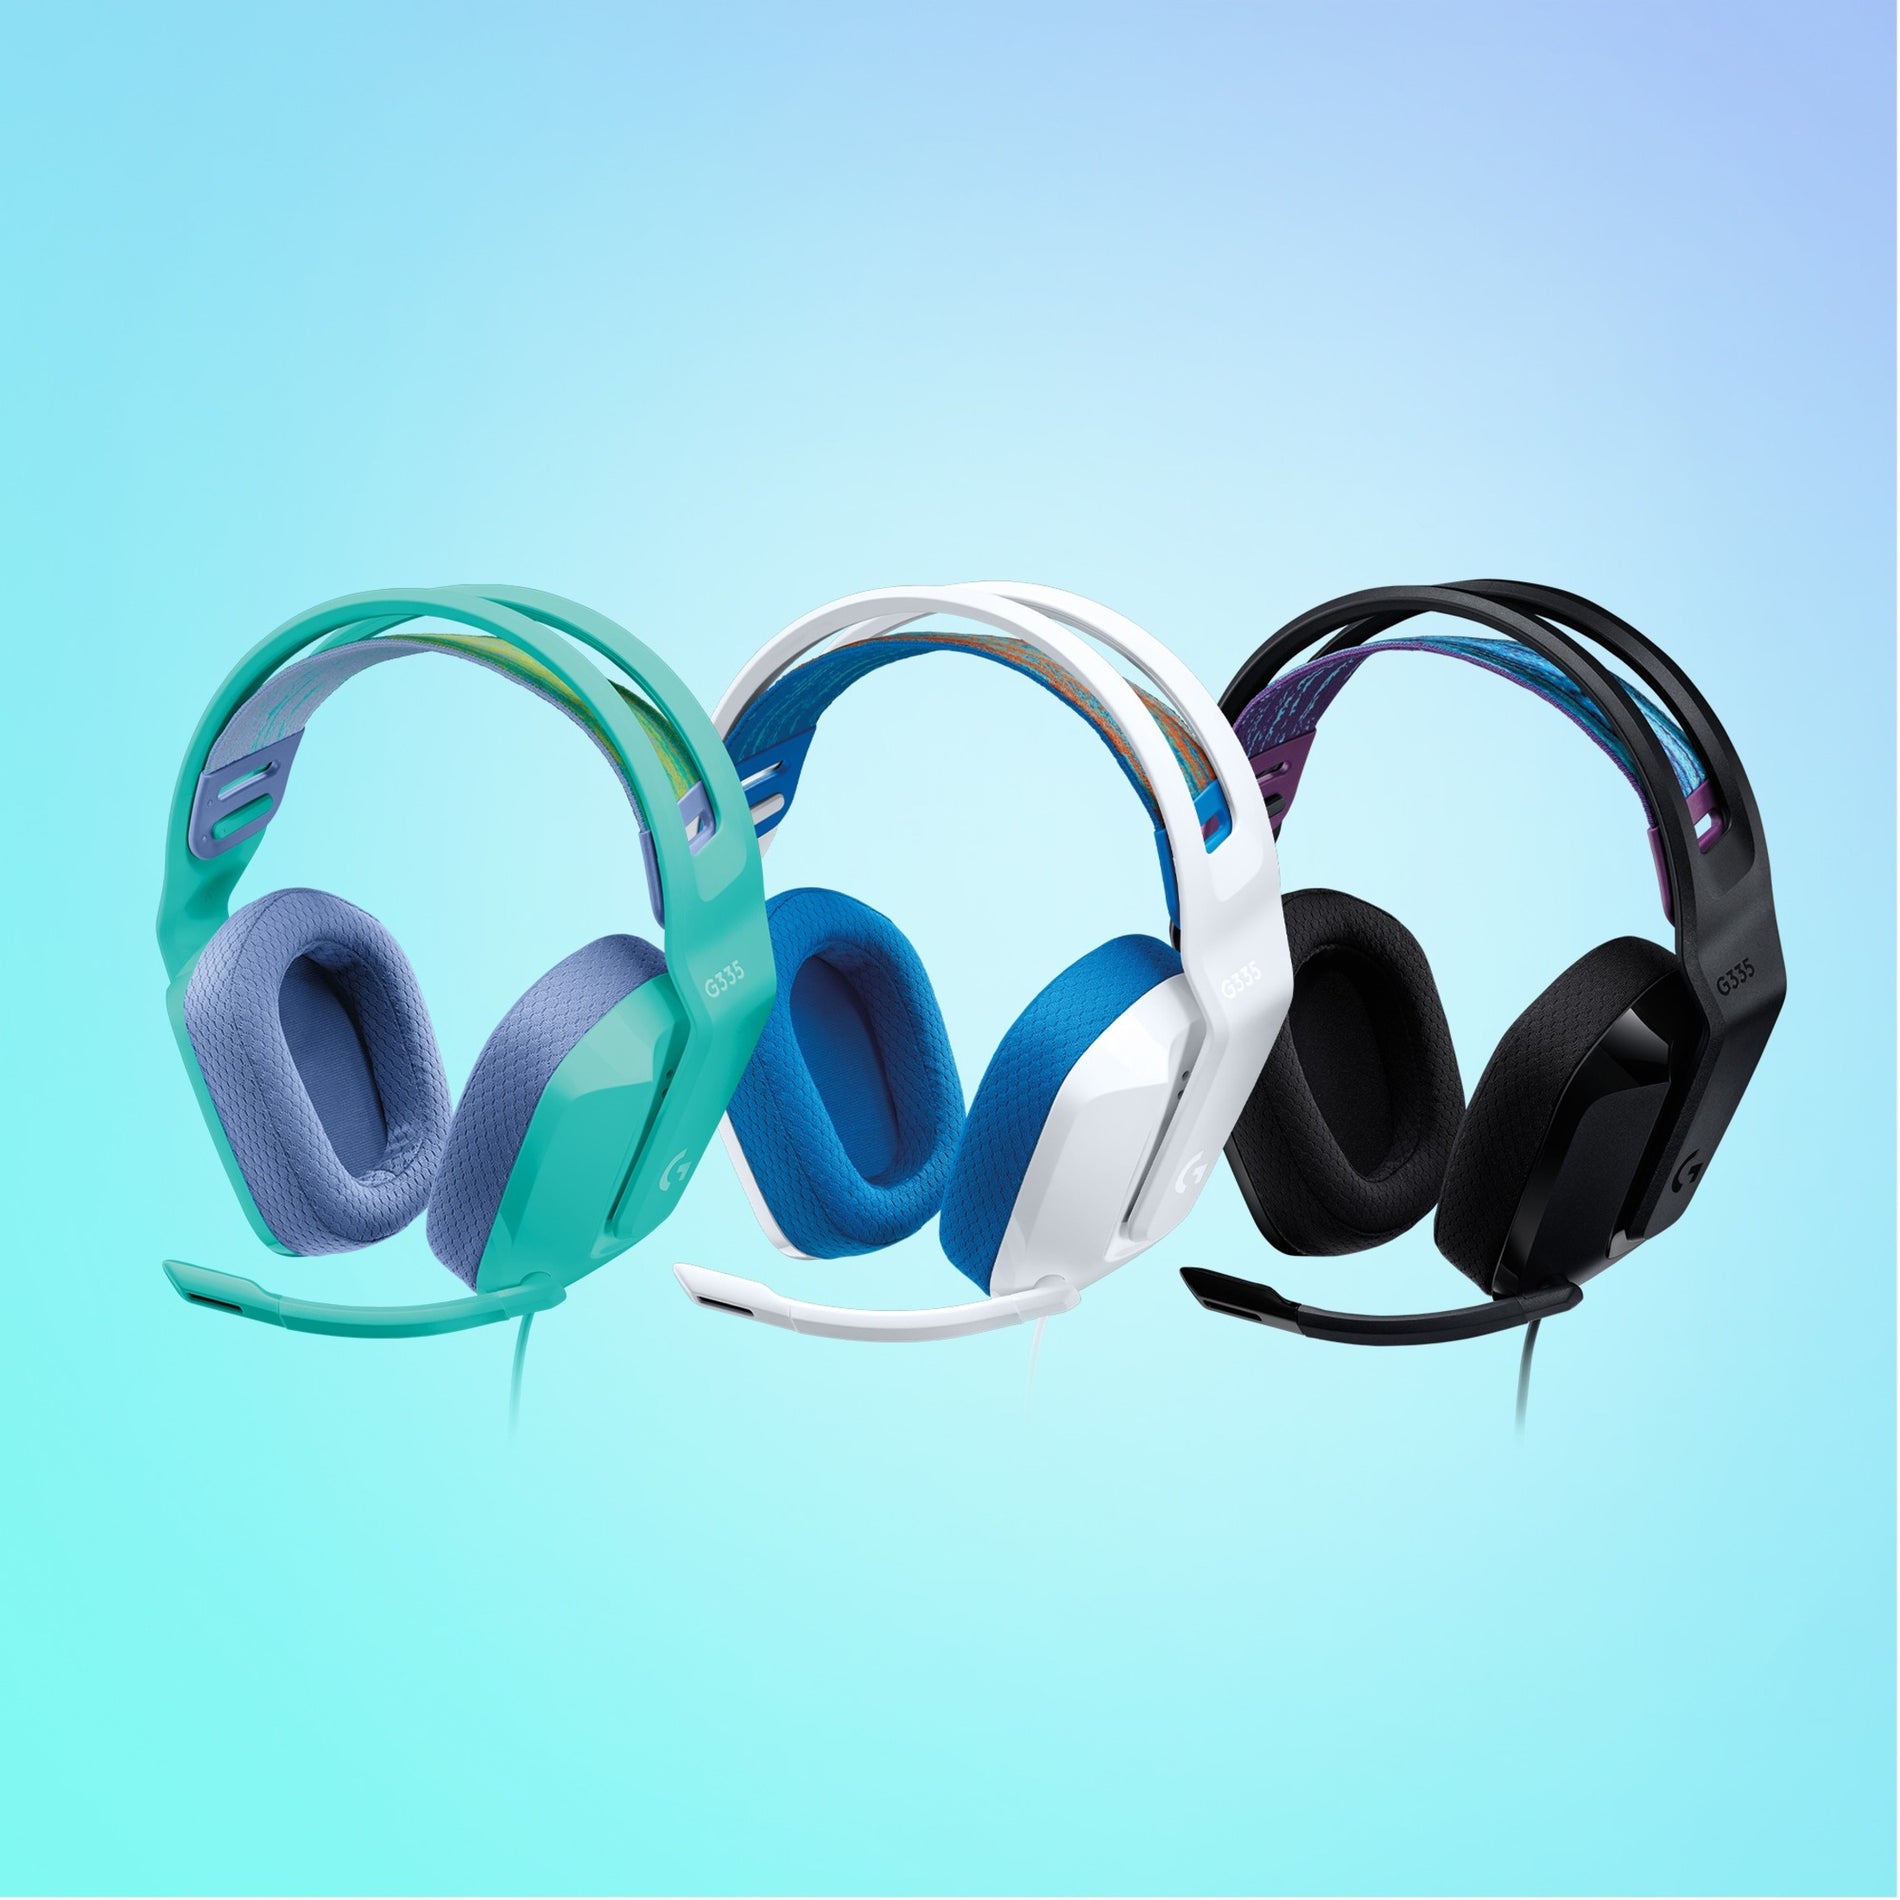 Logitech 981-001023 G335 Wired Gaming Headset, Lightweight On-ear Stereo Headphones